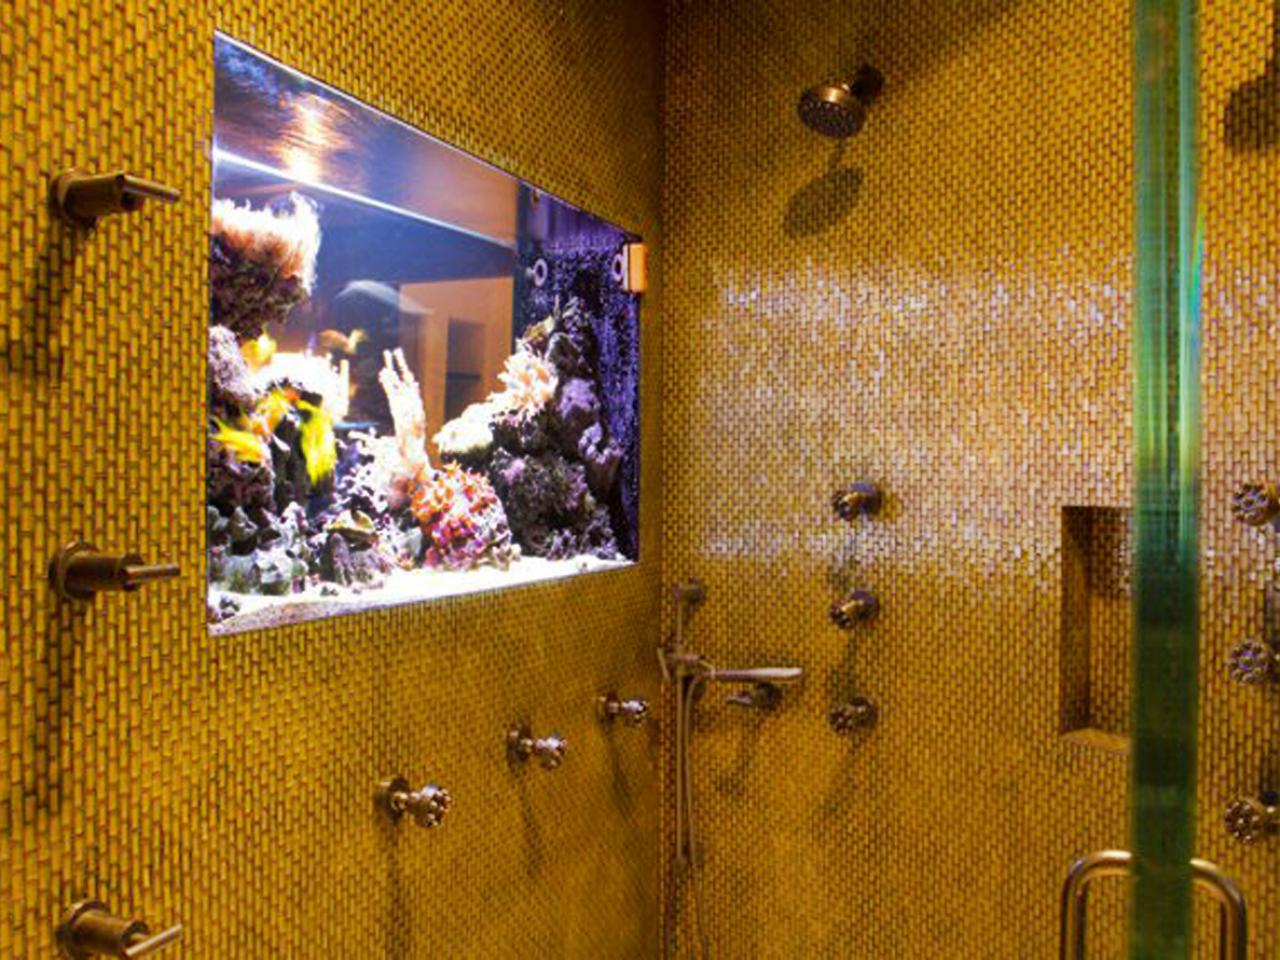 10 Wondrous Aquarium Design Ideas for Your Extraordinary Home